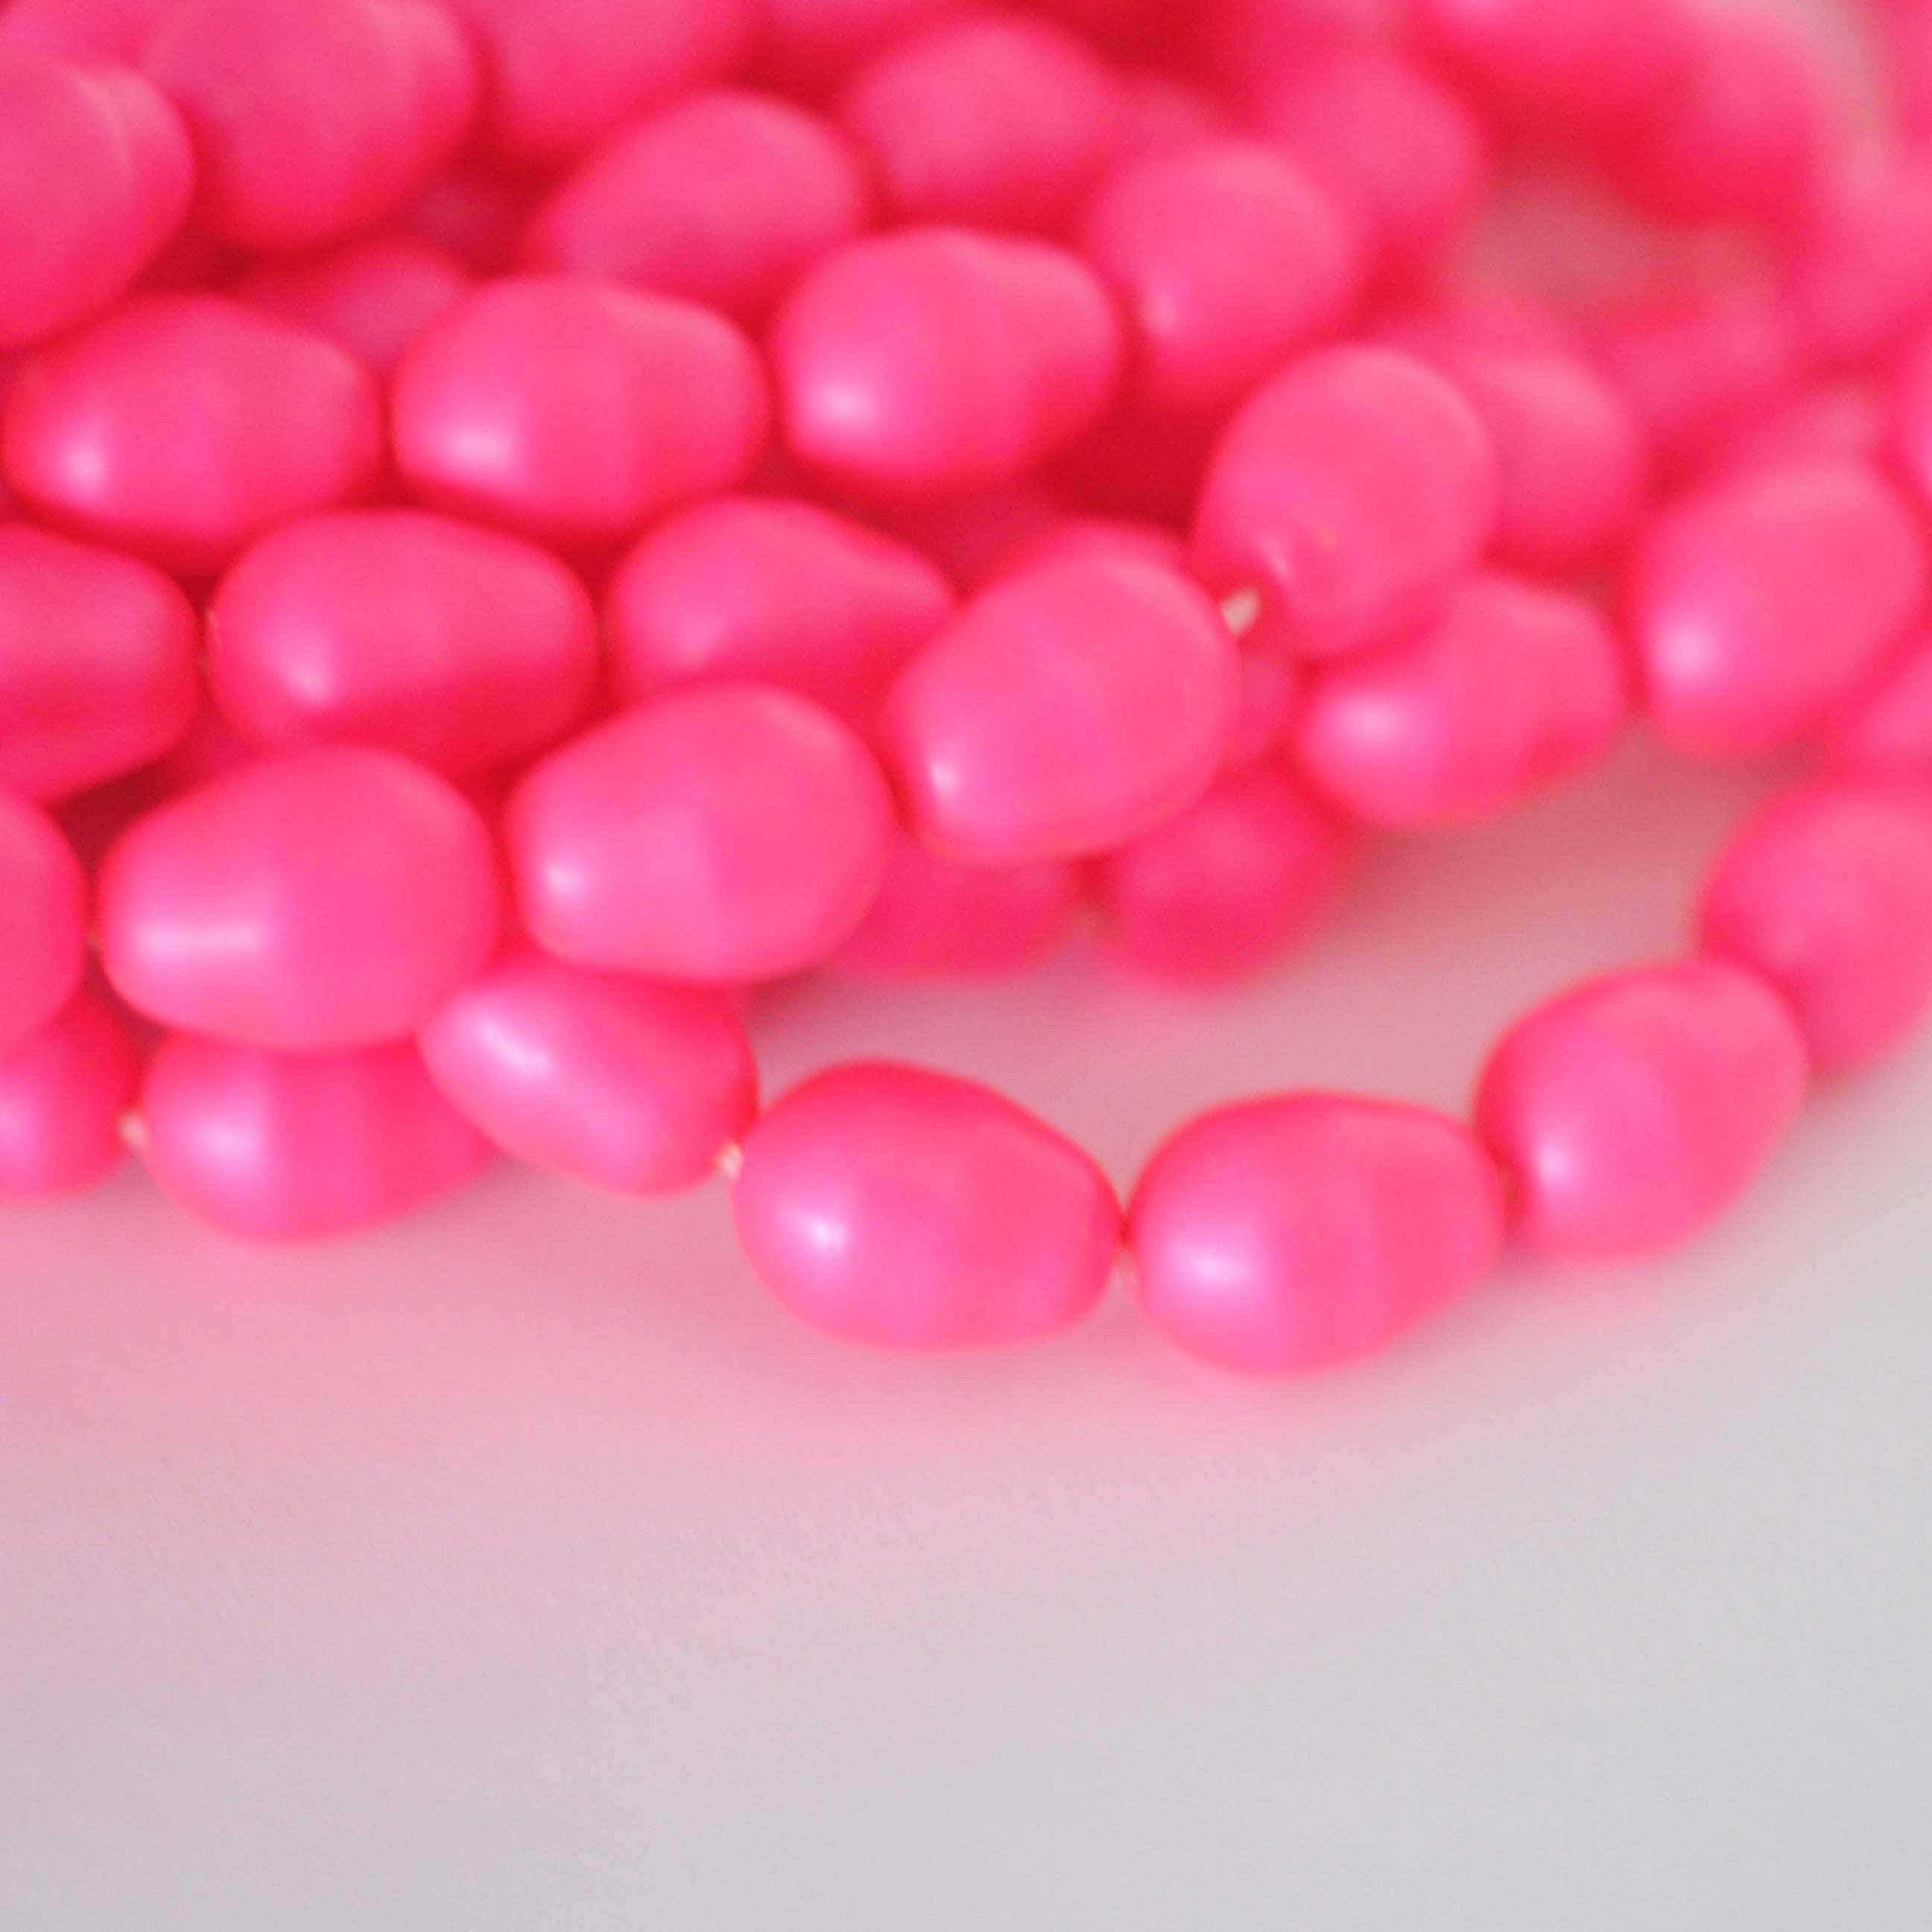 Neon Pink Crystal Pearls 11x10mm 5821 Barton Crystal Pearl Beads